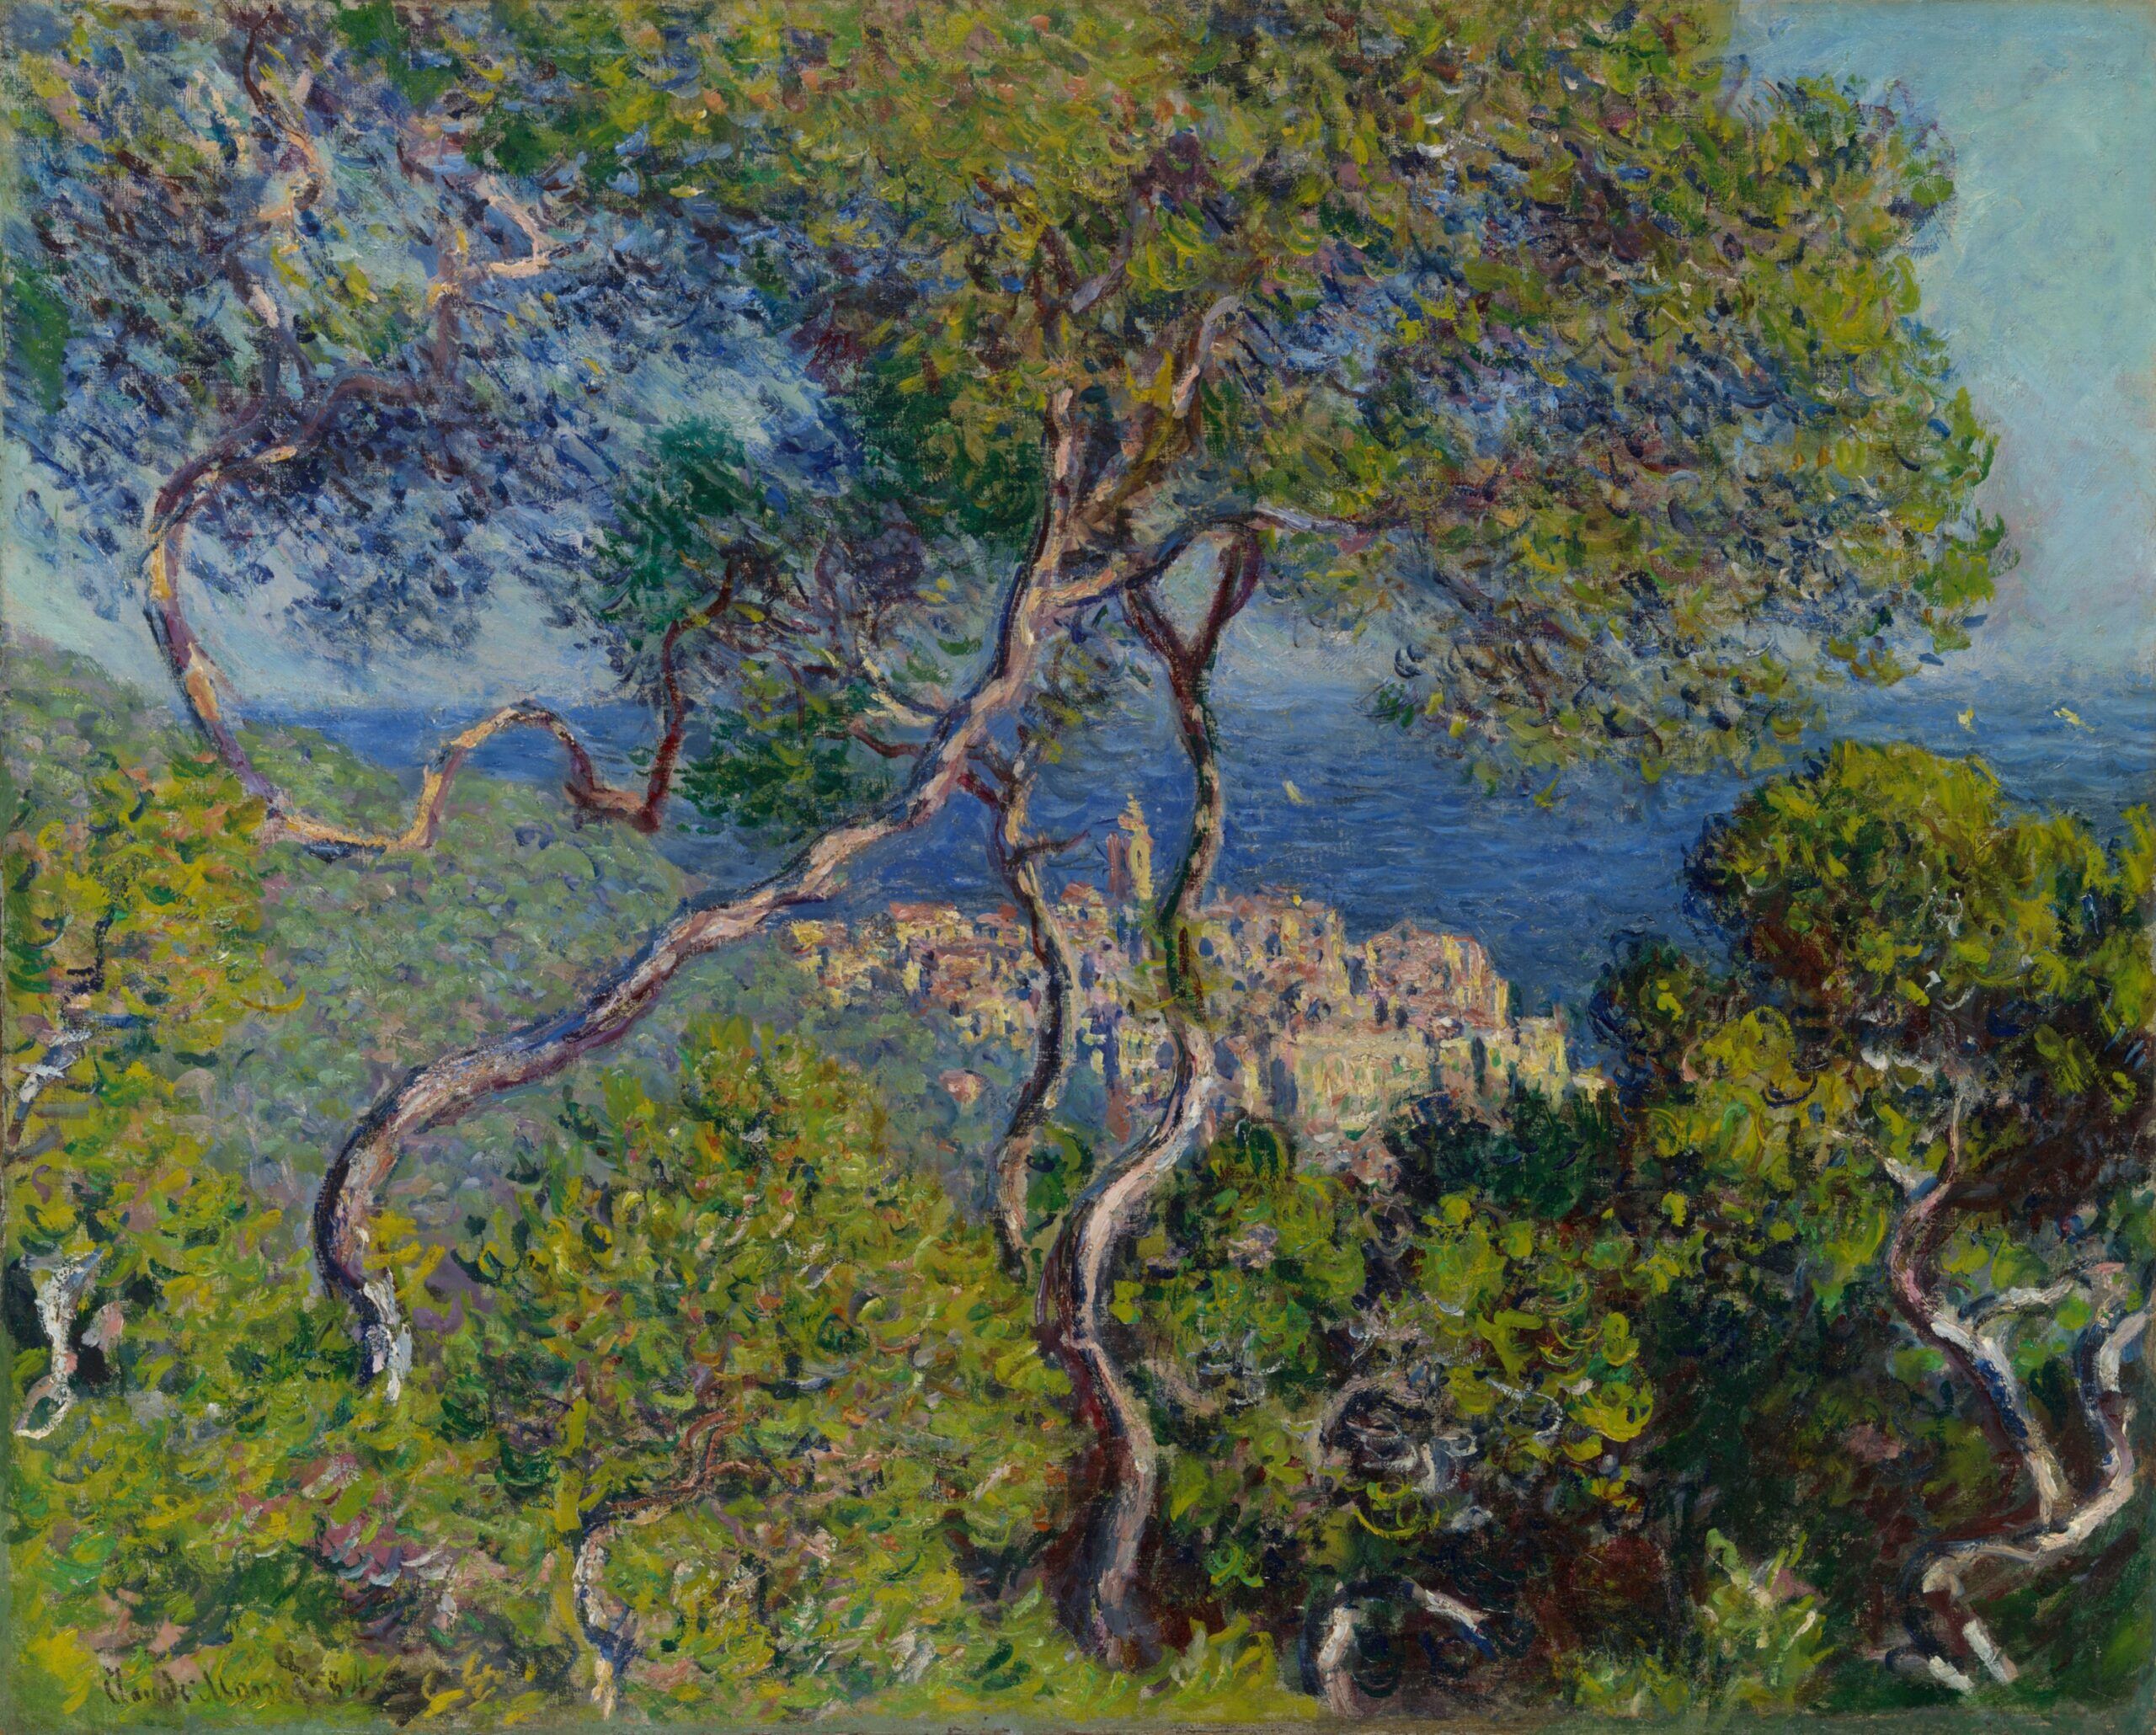 "Bordighera", de Monet